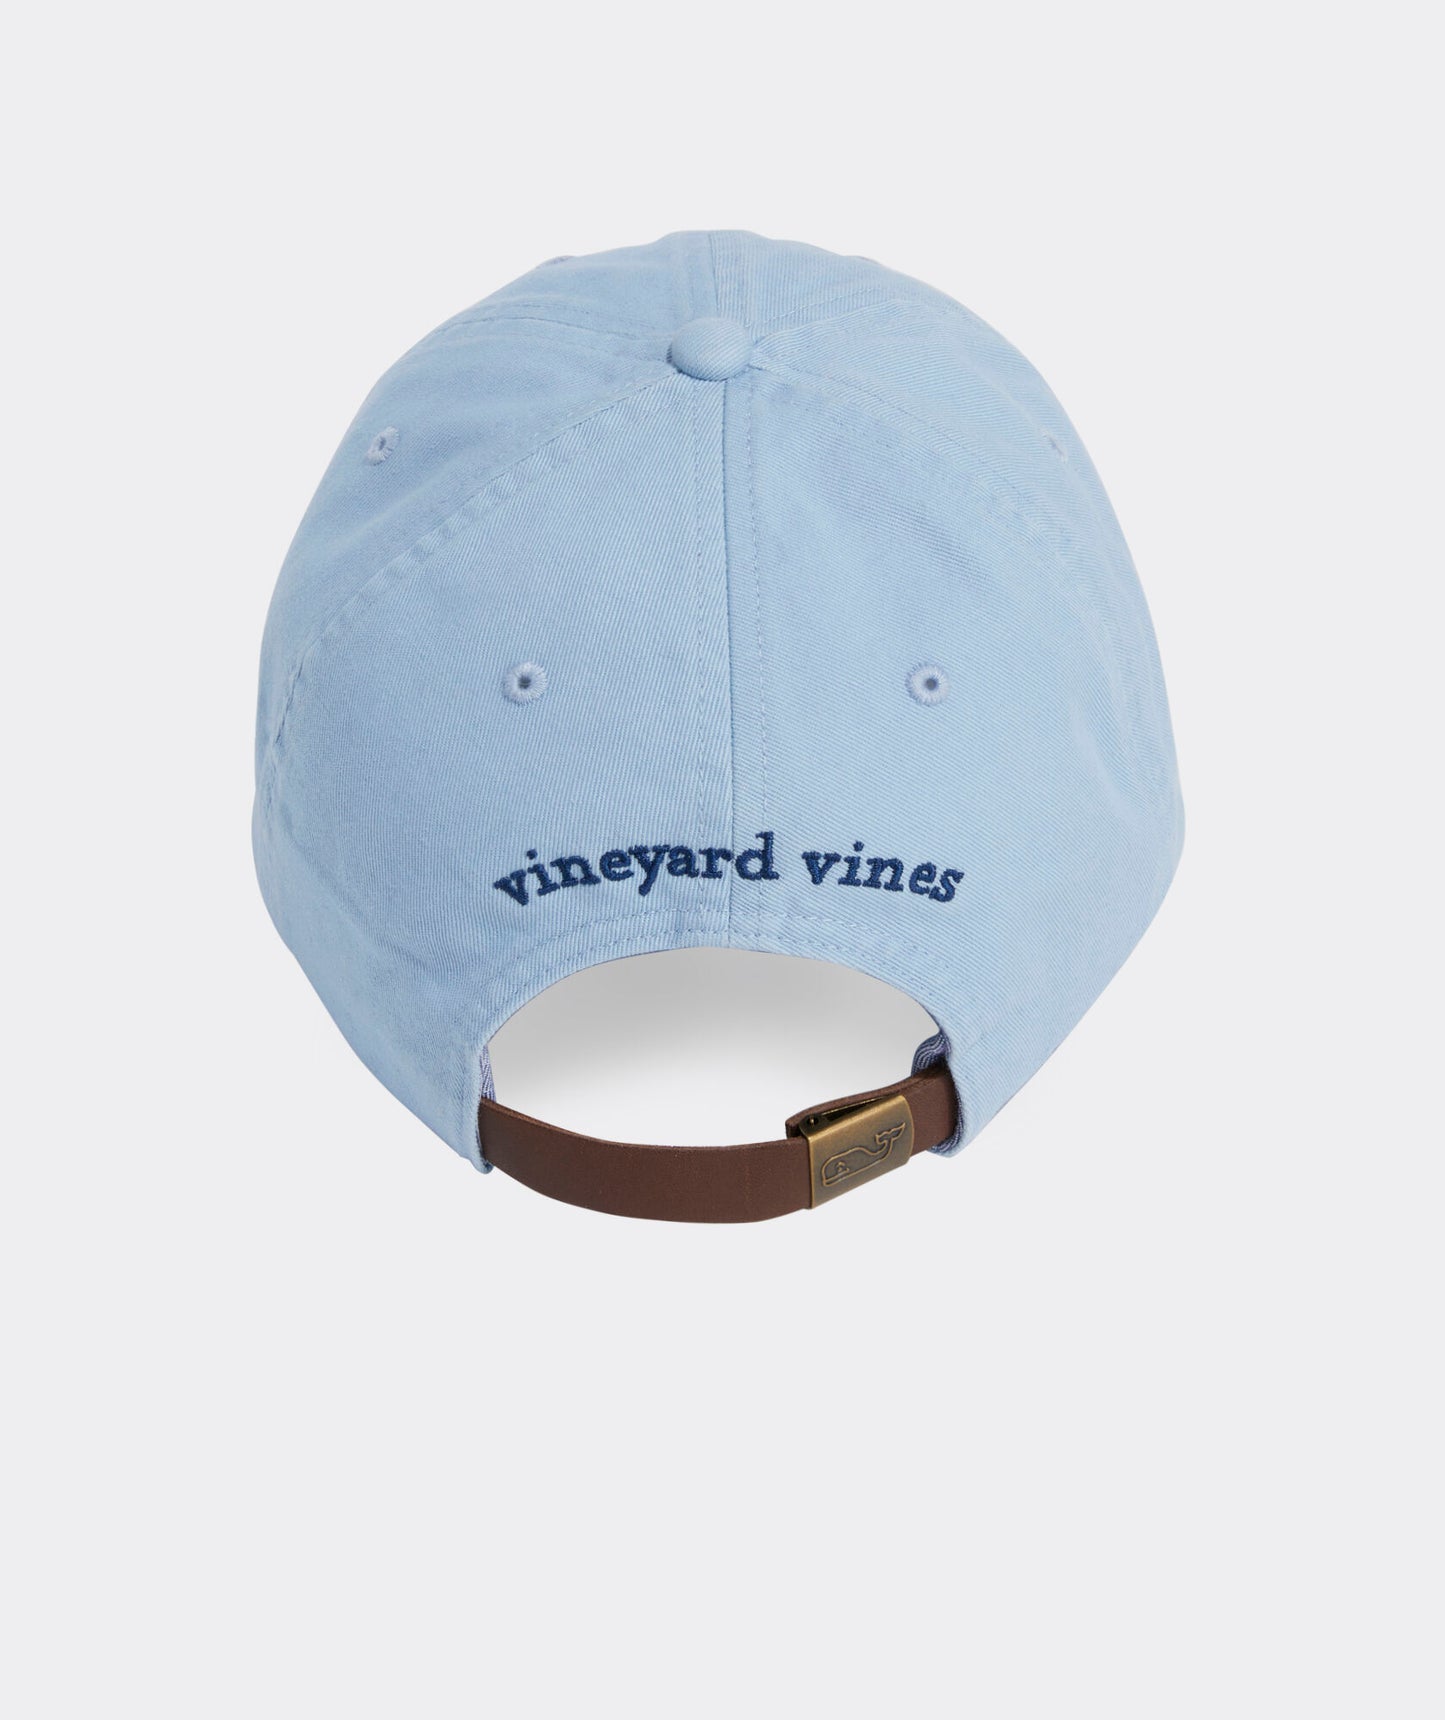 Whale Baseball Hat - BLUE SKY